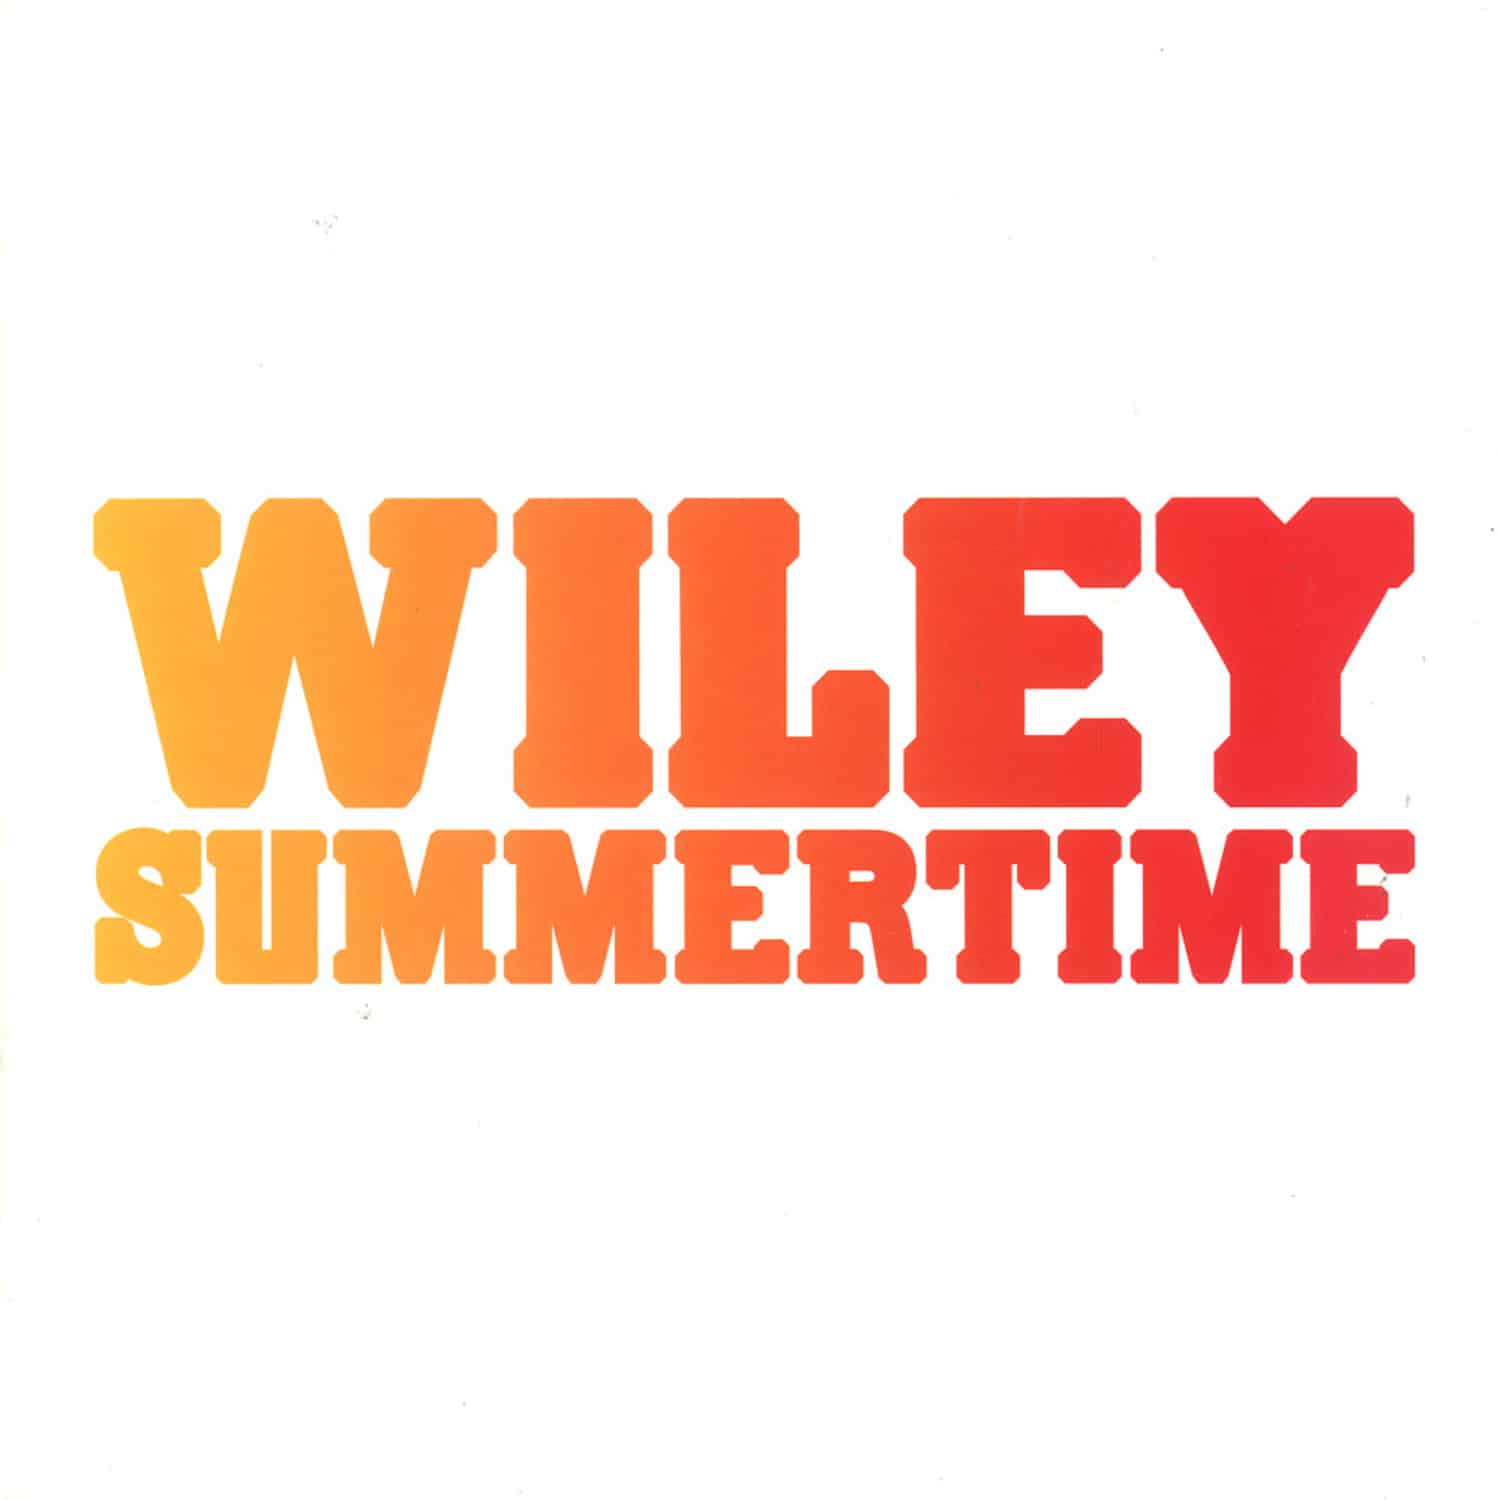 Wiley - SUMMERTIME